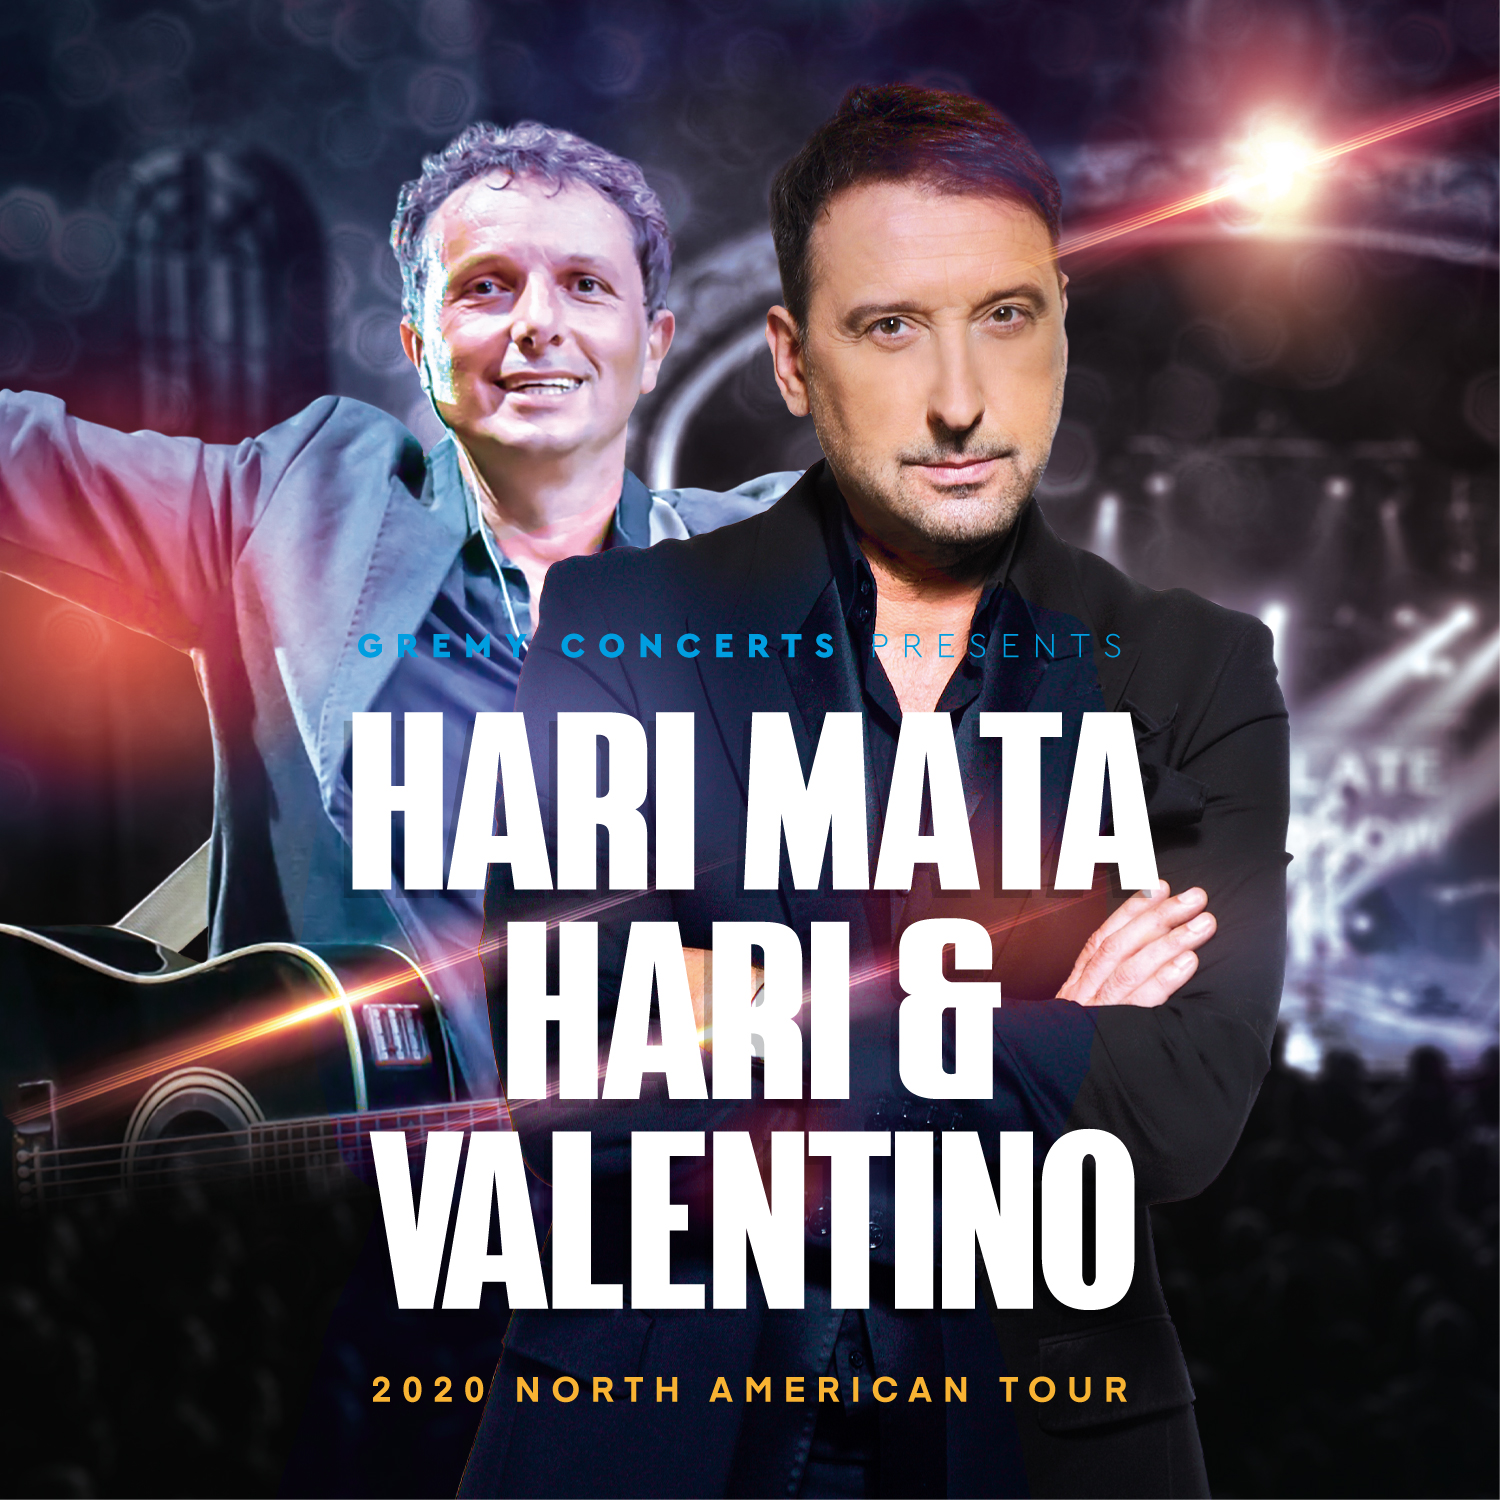 Hari Mata Hari & Valentino | Toronto | MAY 15, 2020